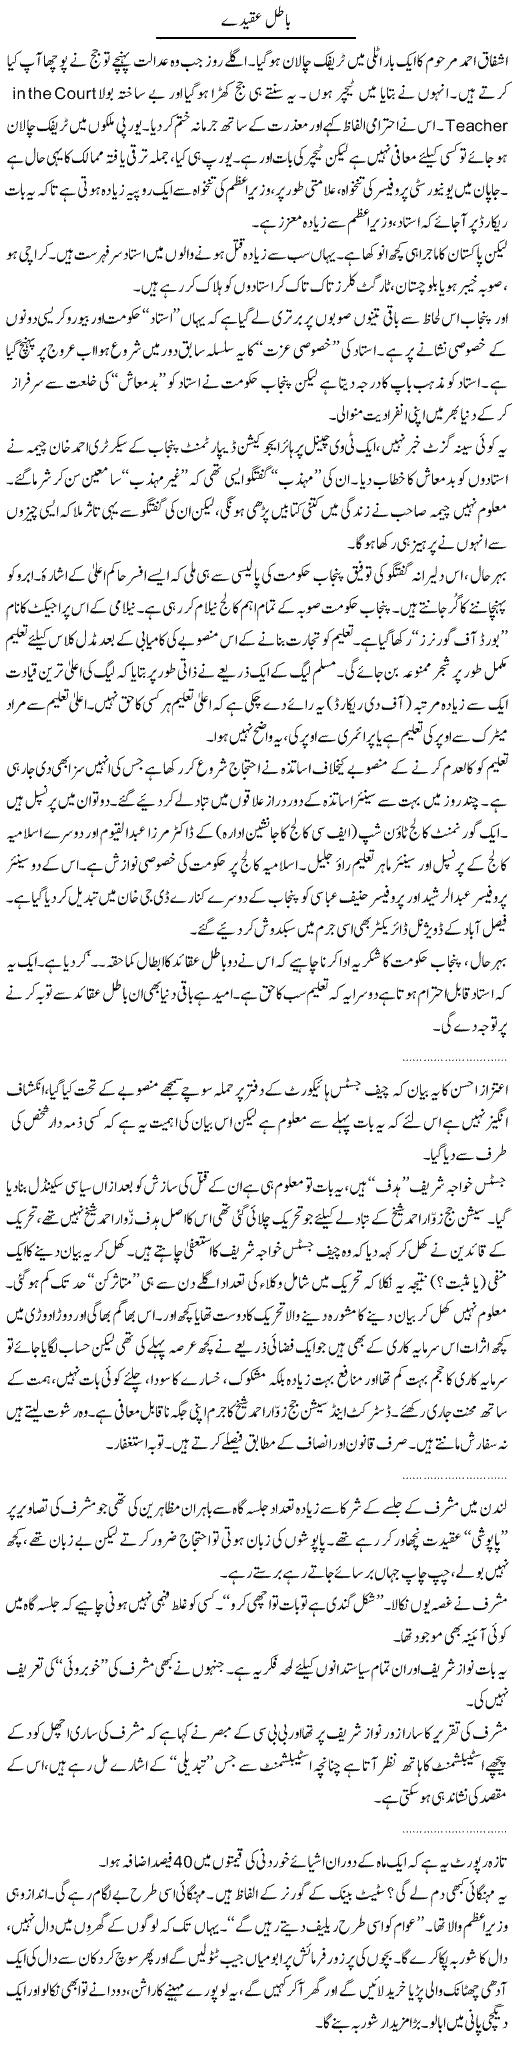 Wrong Beliefs Express Column Abdullah Tariq 5 October 2010